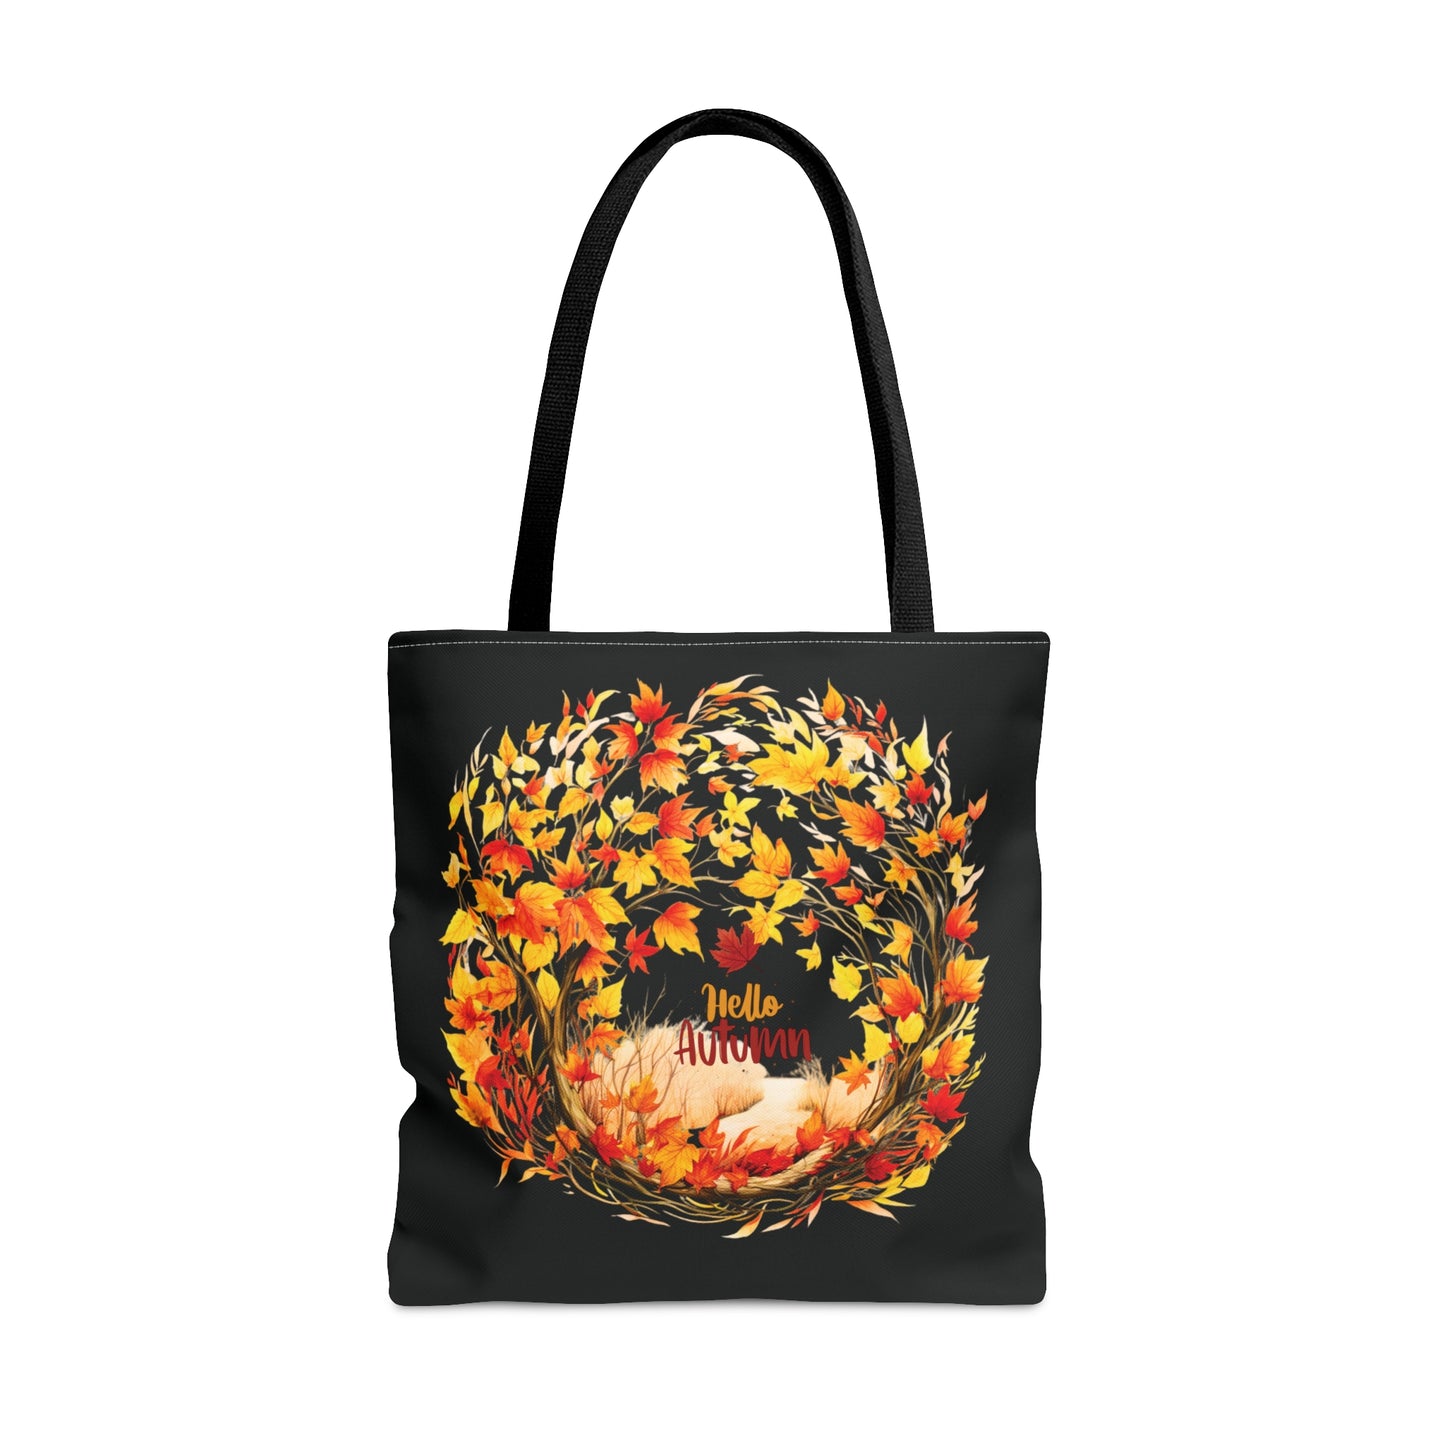 Hello Autumn Tote Bag - Fall Leaves Canvas Shopping Bag - Seasonal Fashion Accessory Bags Large  